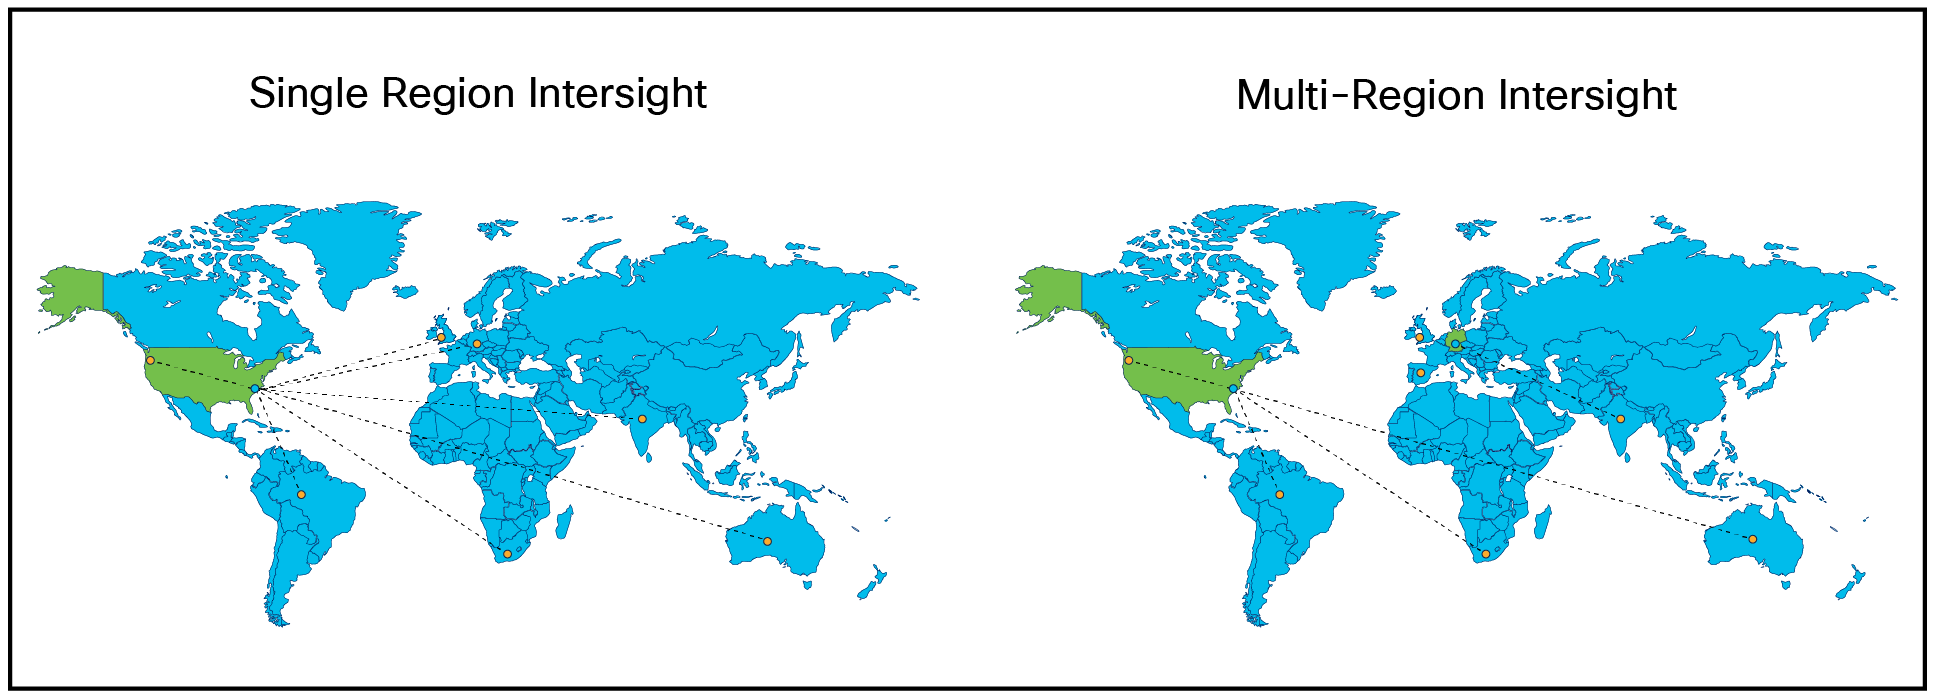 Multi-region Intersight account locations